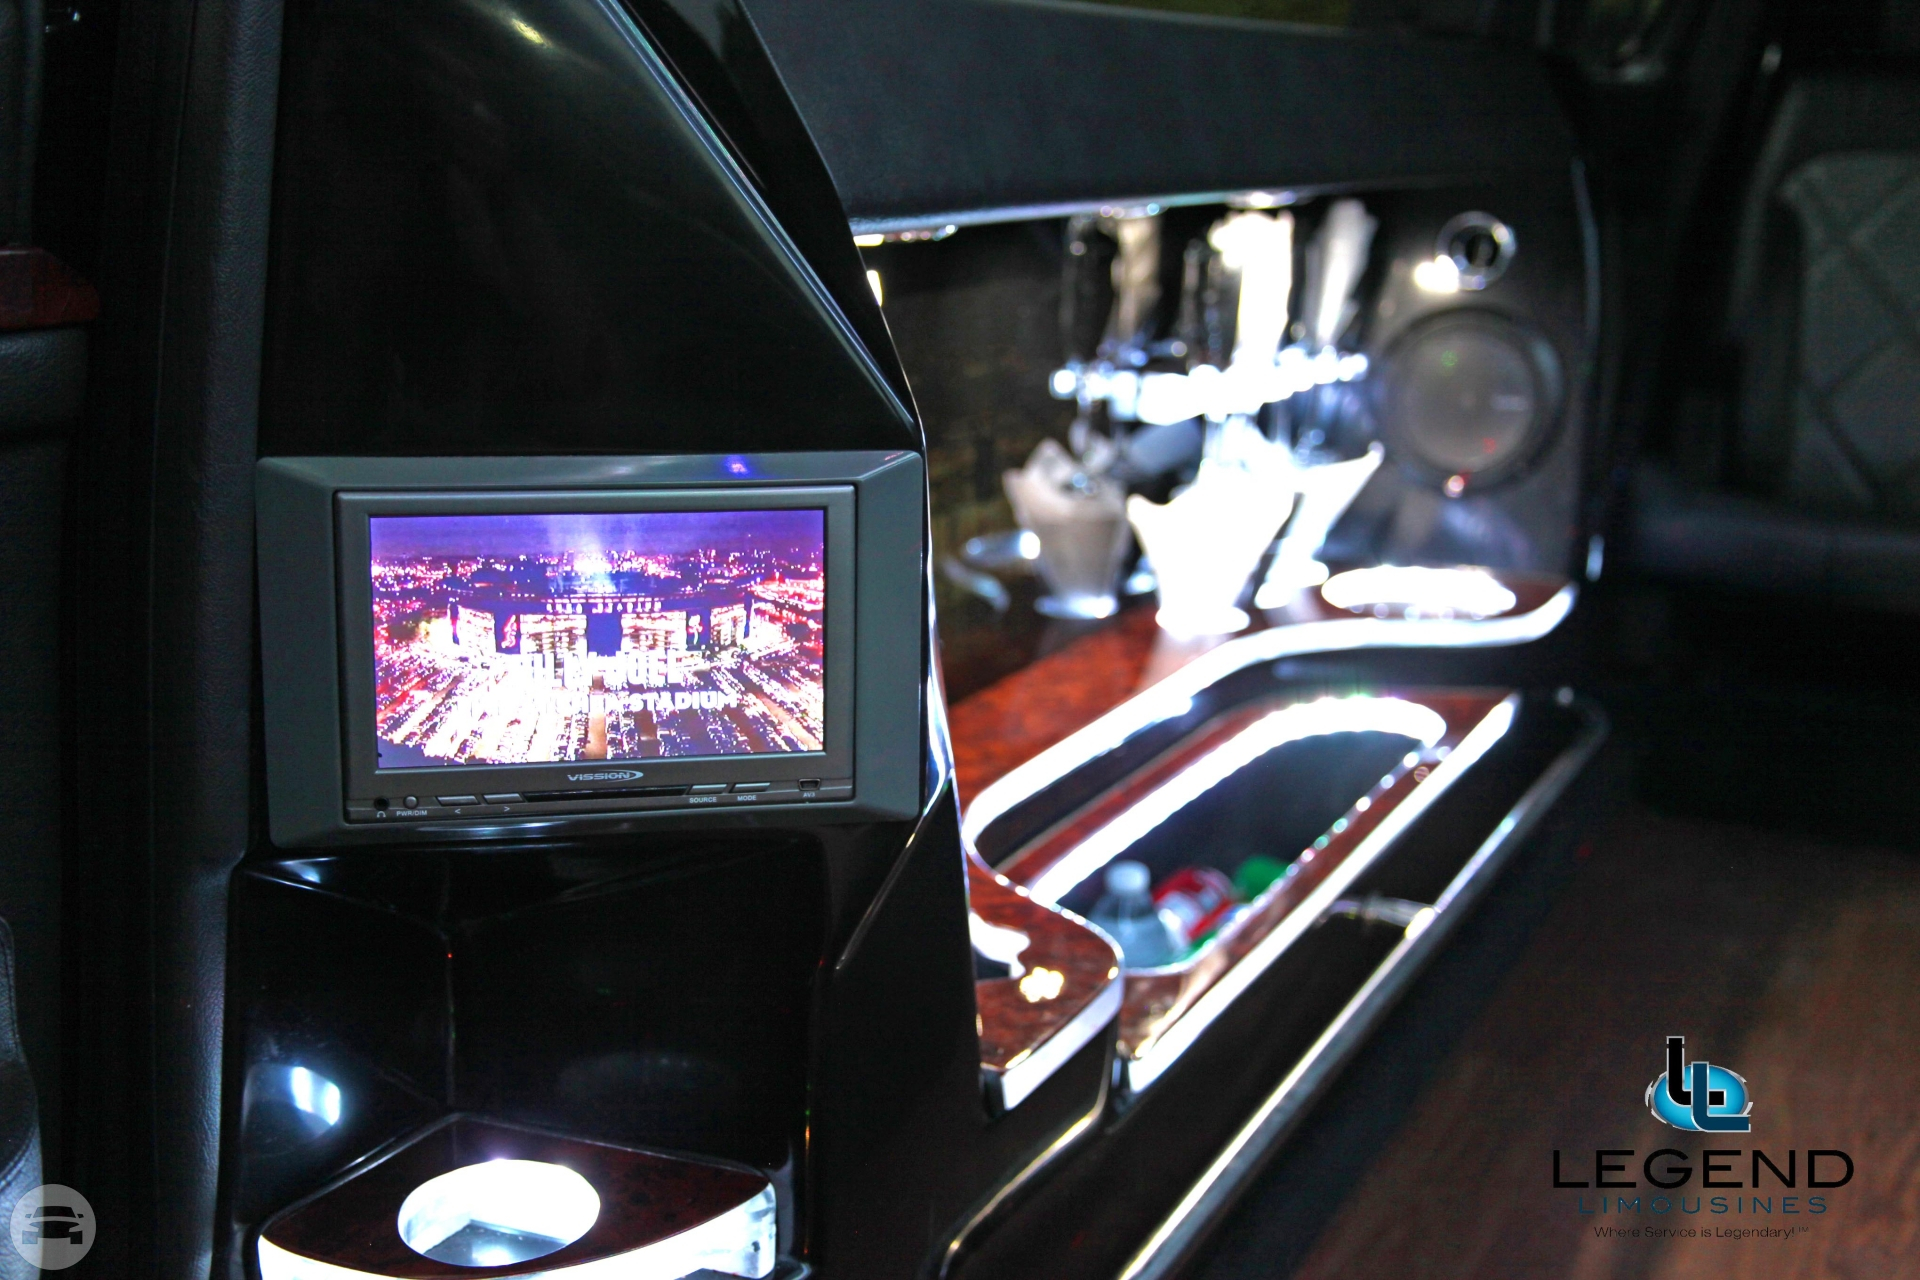 Black Lincoln MKT Stretch 8-10 Passenger Limousines
Limo /


 / Hourly HKD 0.00
